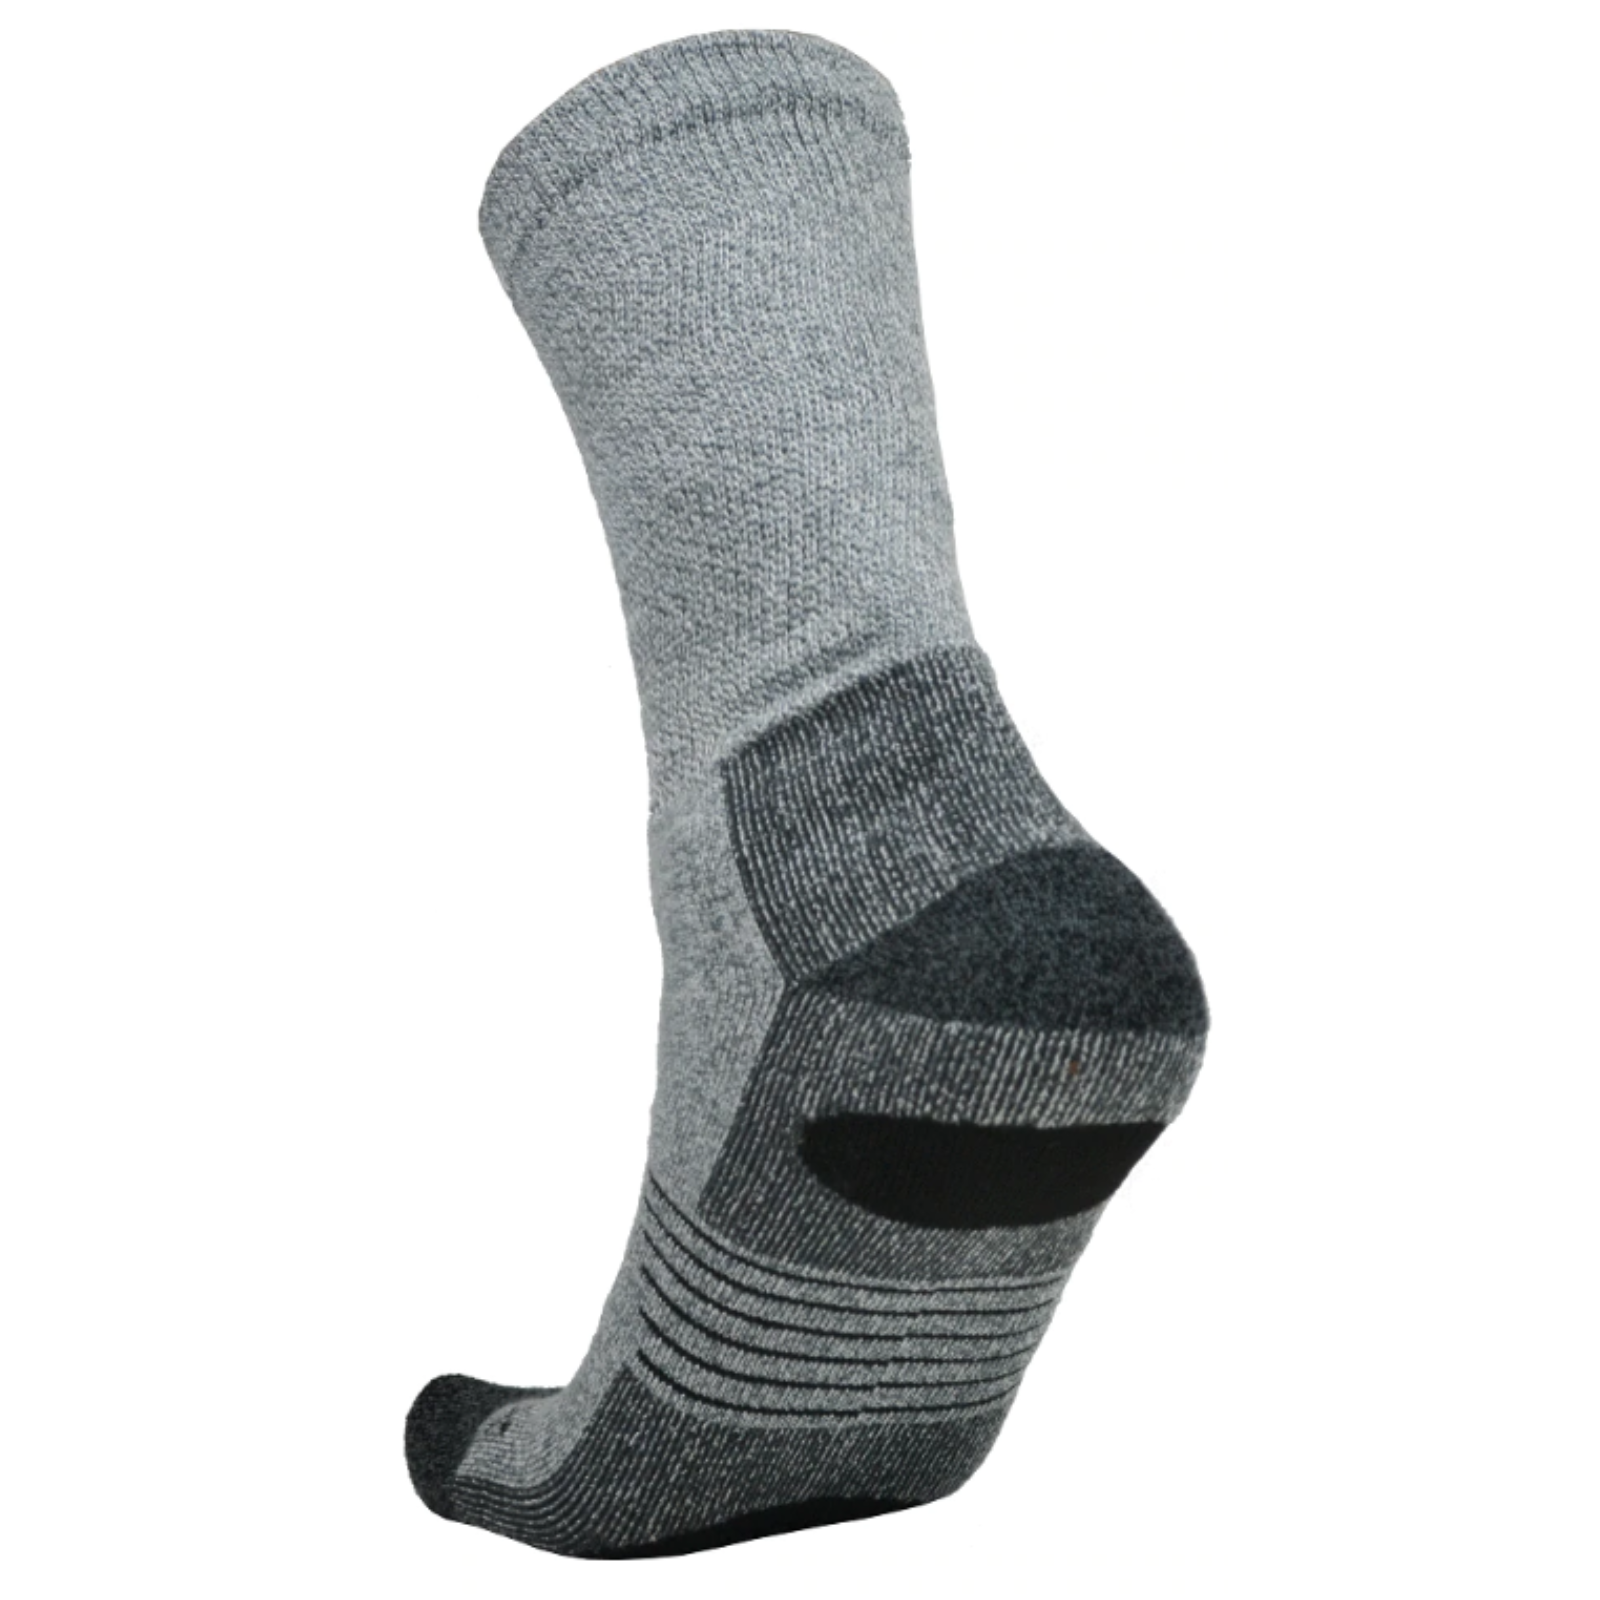 Bamboo Socks by EcoSox - Blister-Free, Ultra-Soft, Wicks Moisture Away